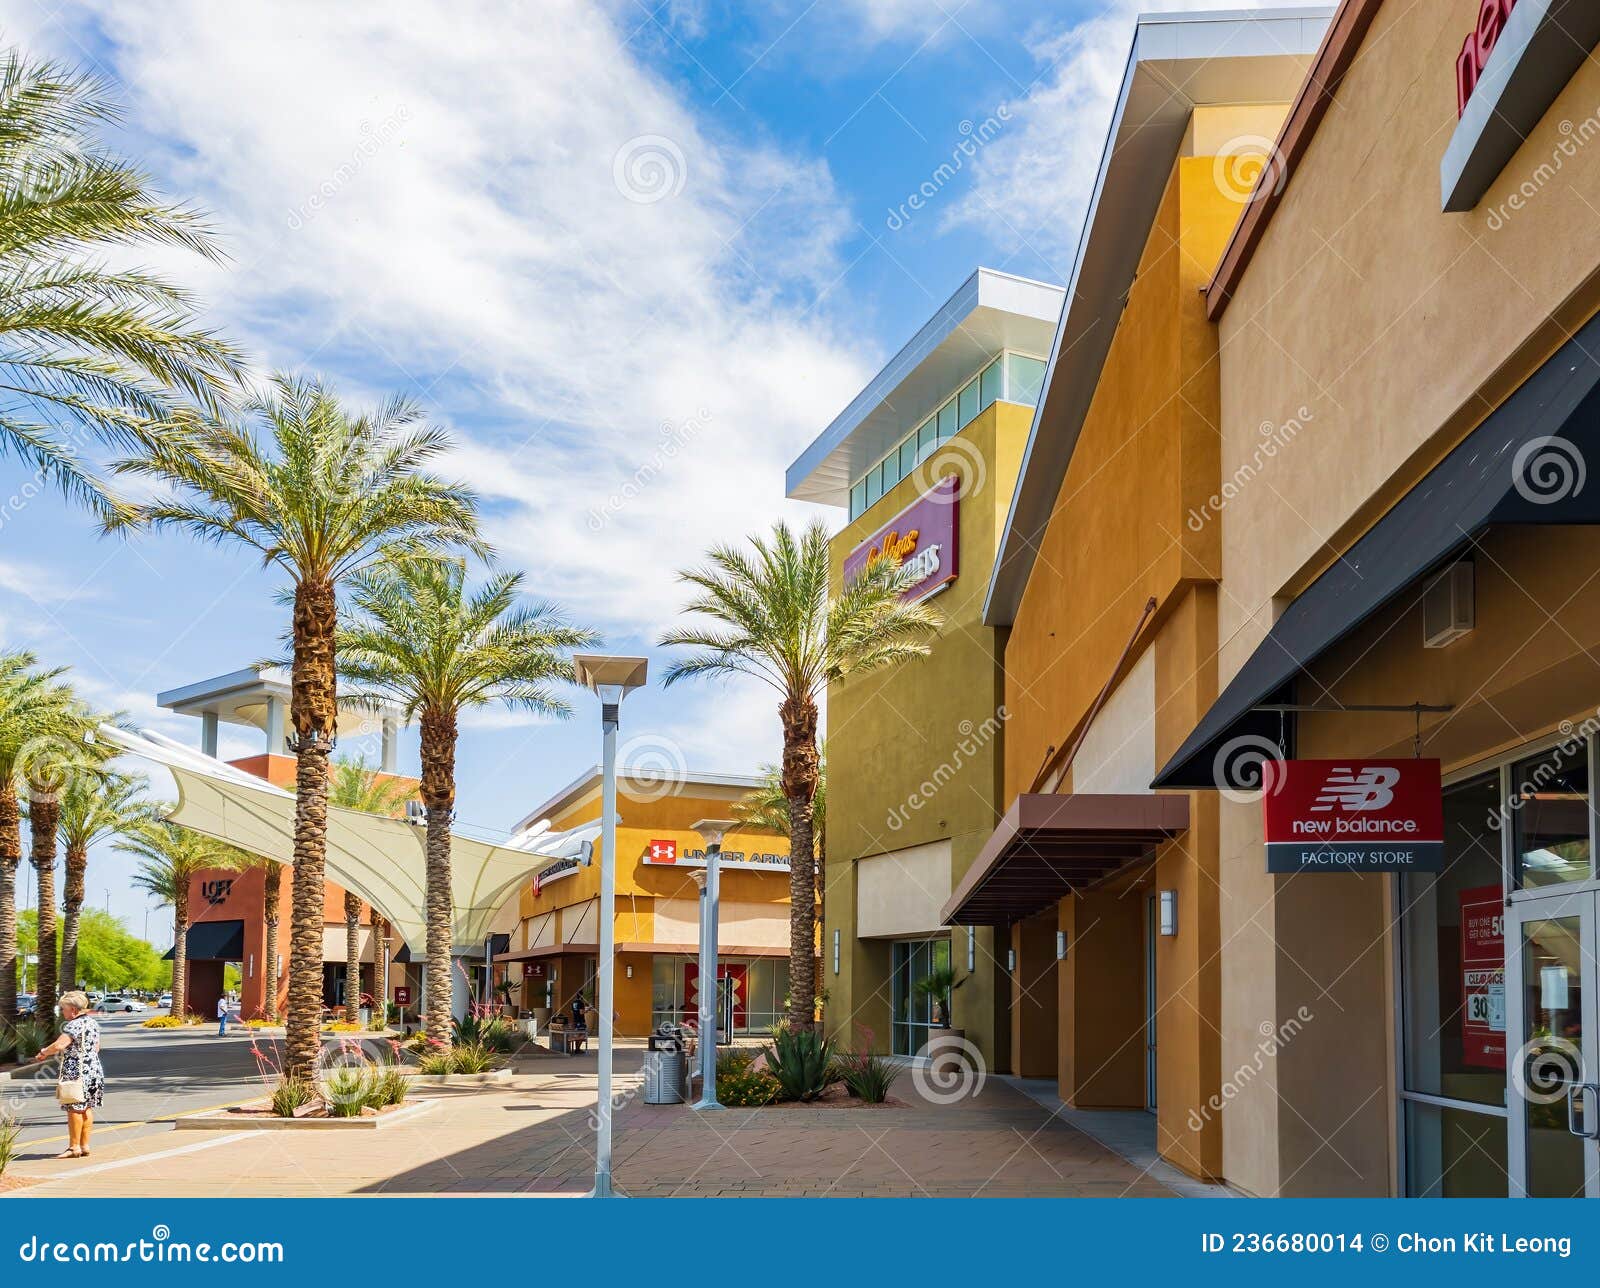 Nevada Outlet Malls: Las Vegas North Premium Outlets